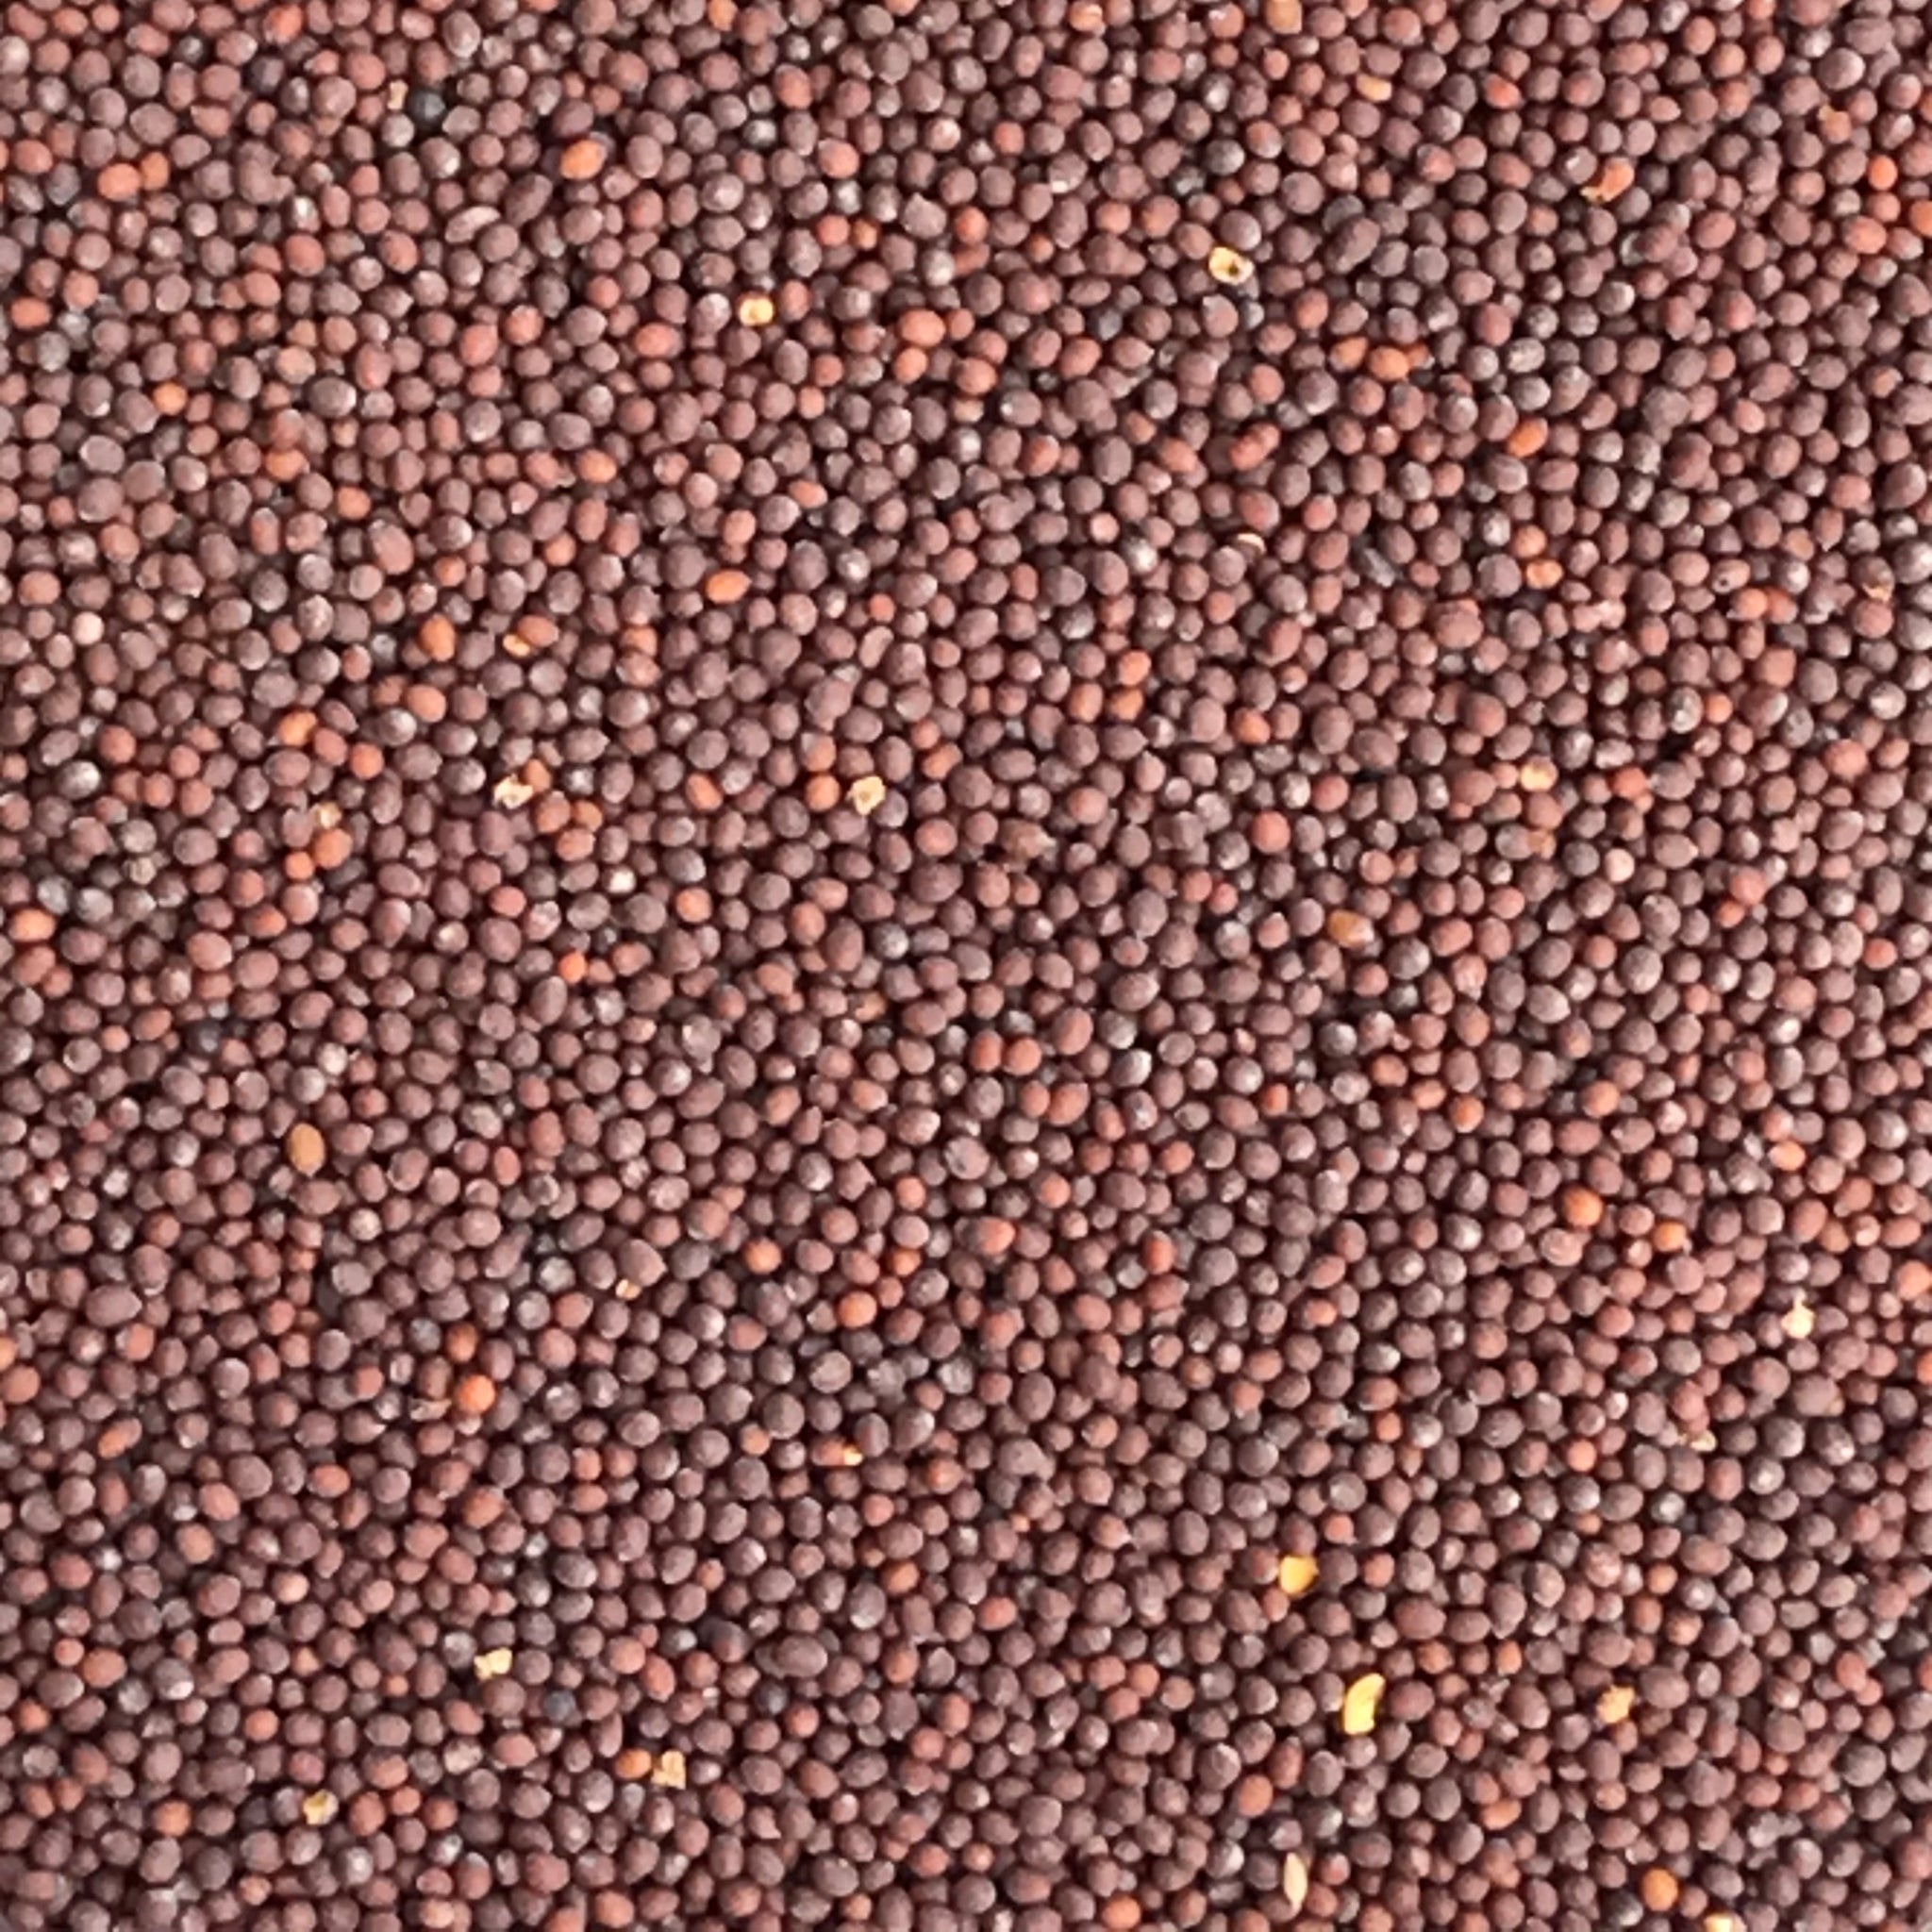 Mustard Seed (Brown)